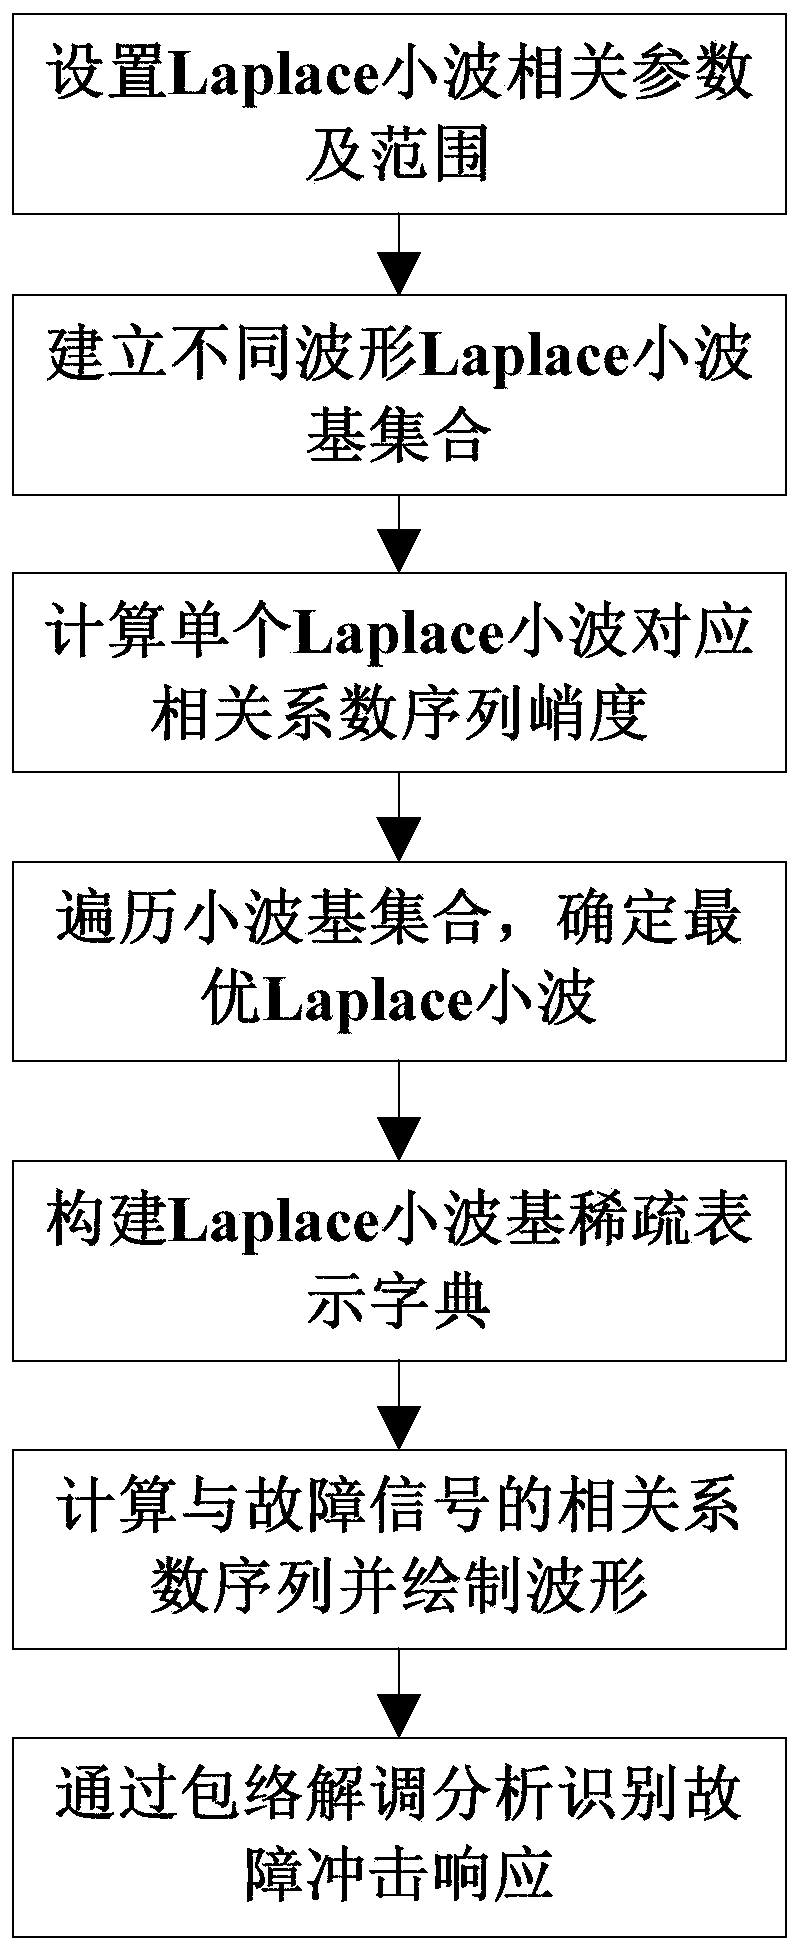 Laplace wavelet basis sparse representation dictionary construction method based on waveform impact matching